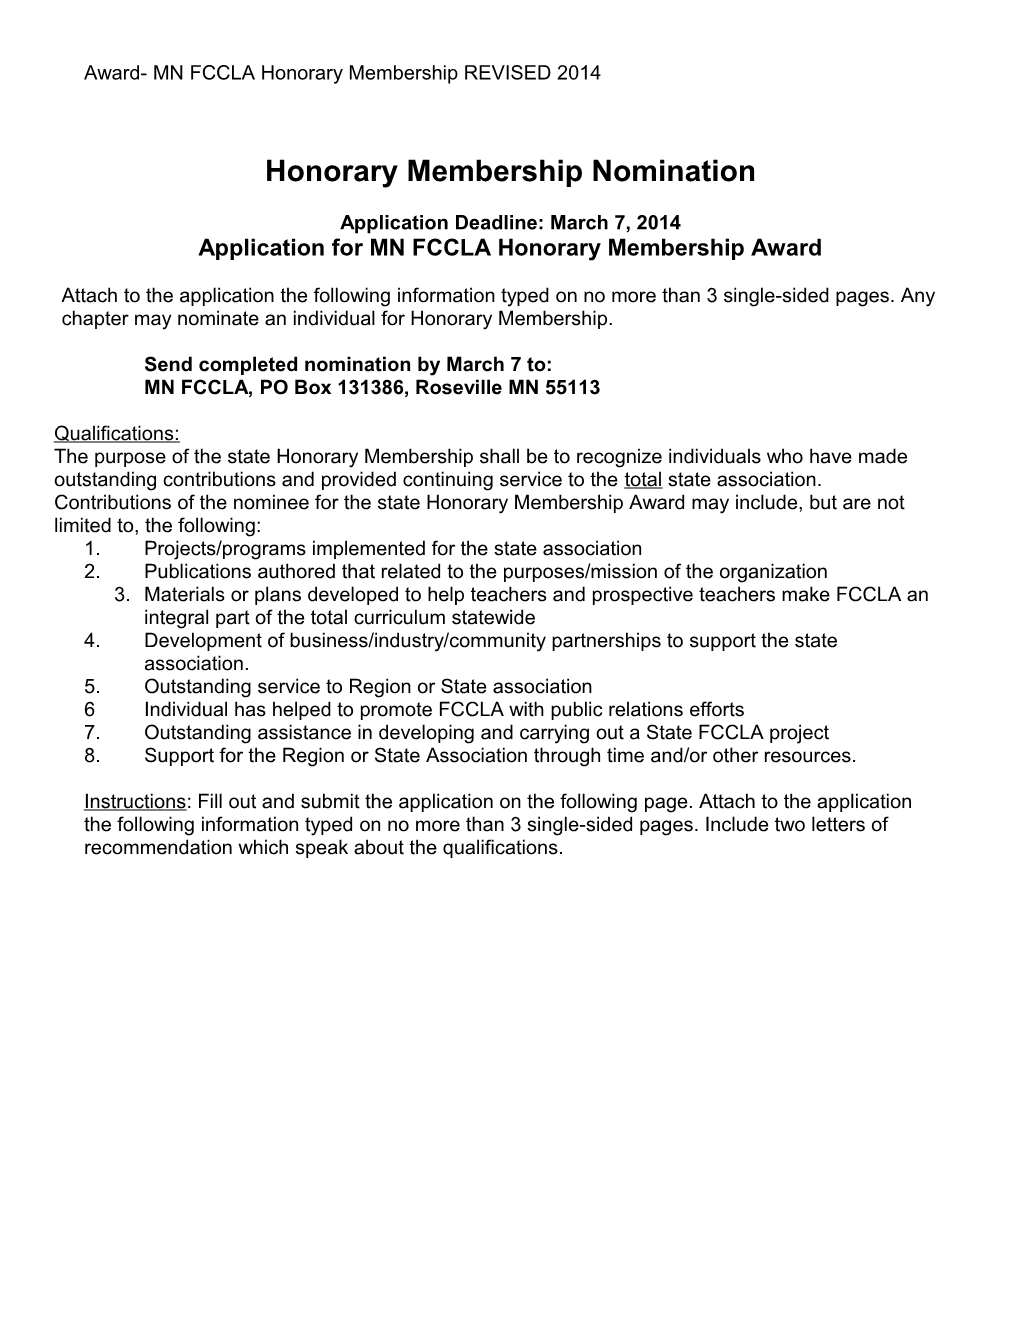 Honorary Membership Nomination